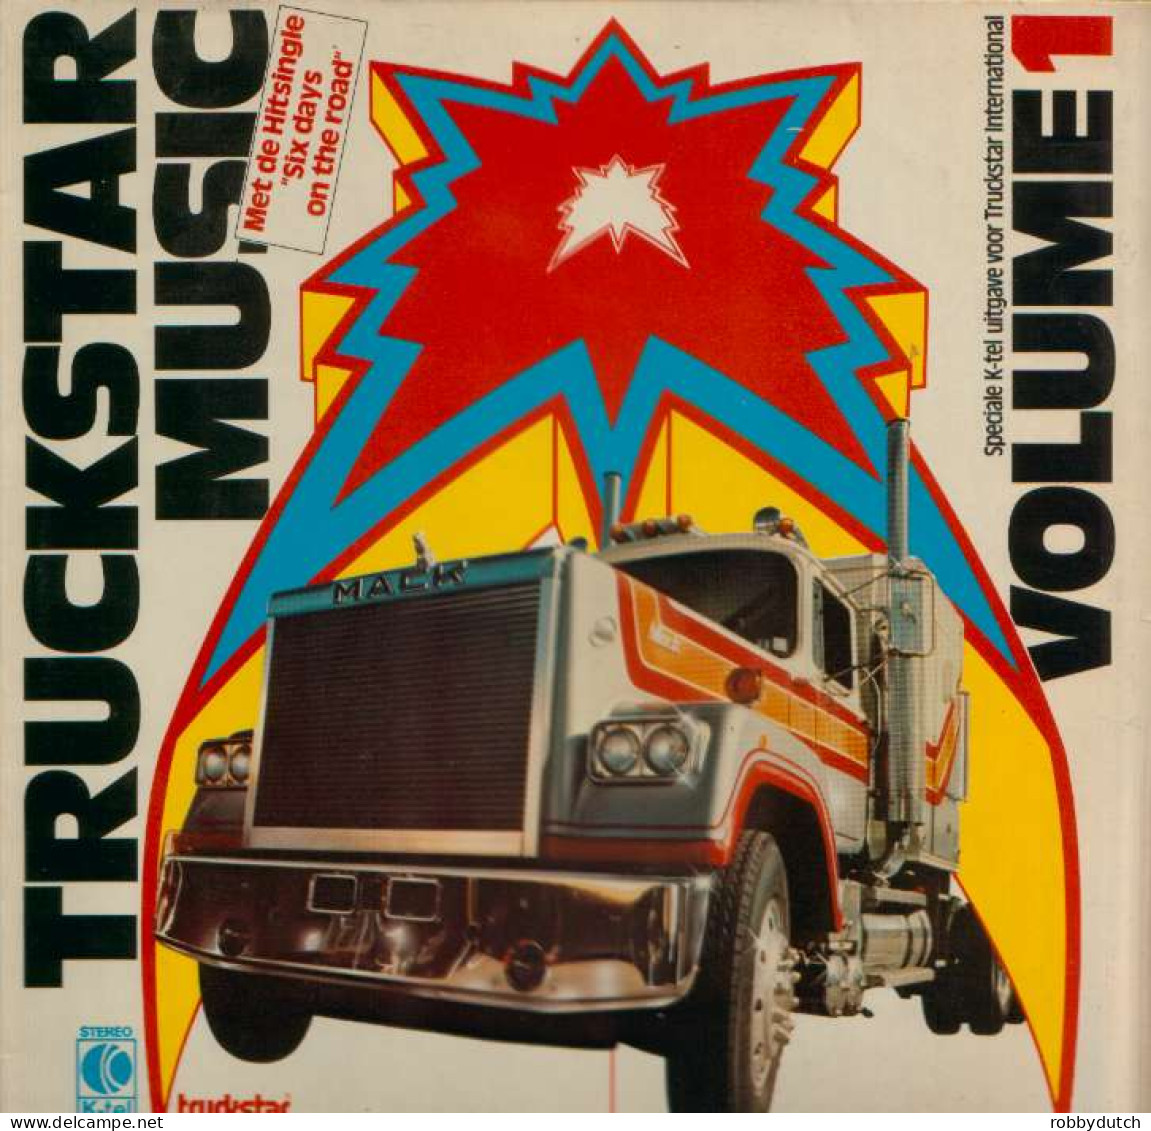 * LP * TRUCKSTAR MUSIC Vol.1 - VARIOUS ARTISTS (Holland 1980 EX-) - Country Y Folk